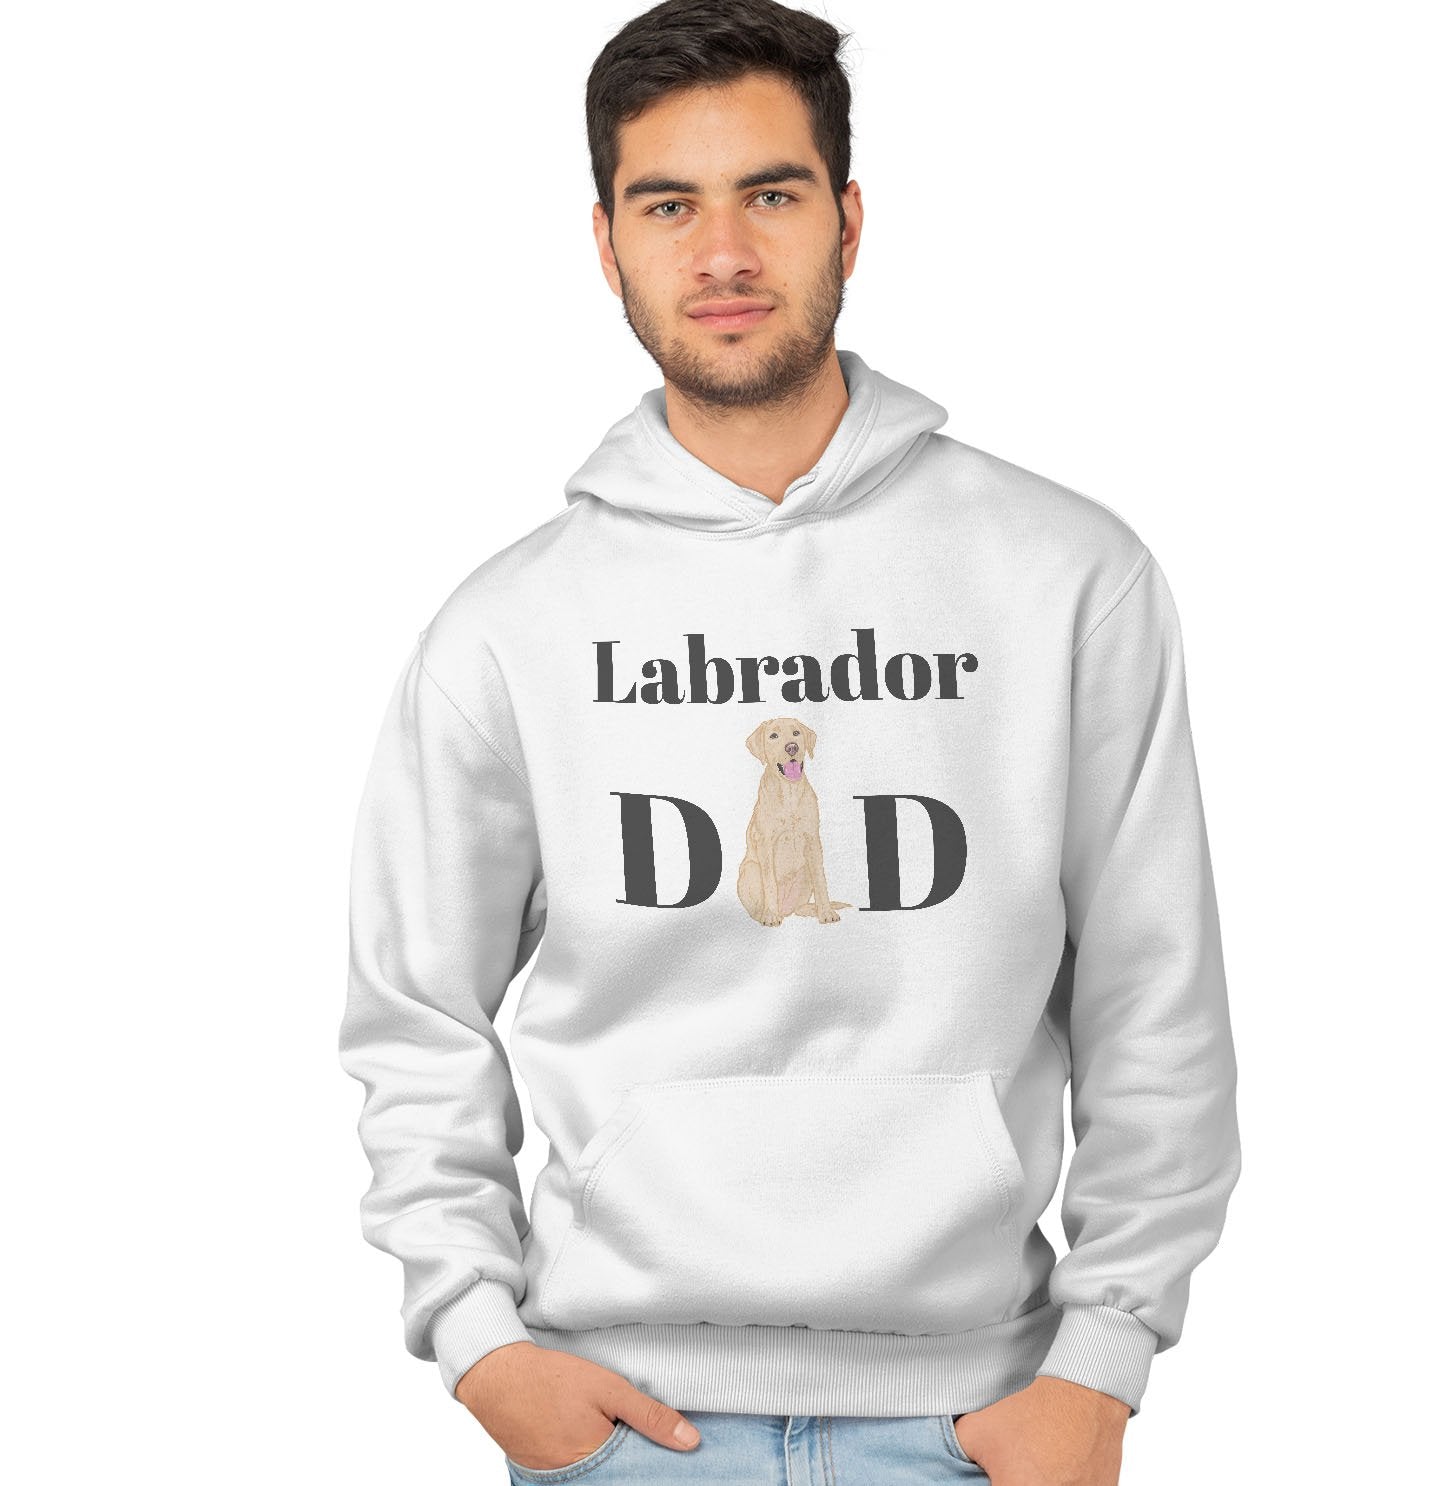 Labradors.com - Yellow Labrador Dad Illustration - Adult Unisex Hoodie Sweatshirt